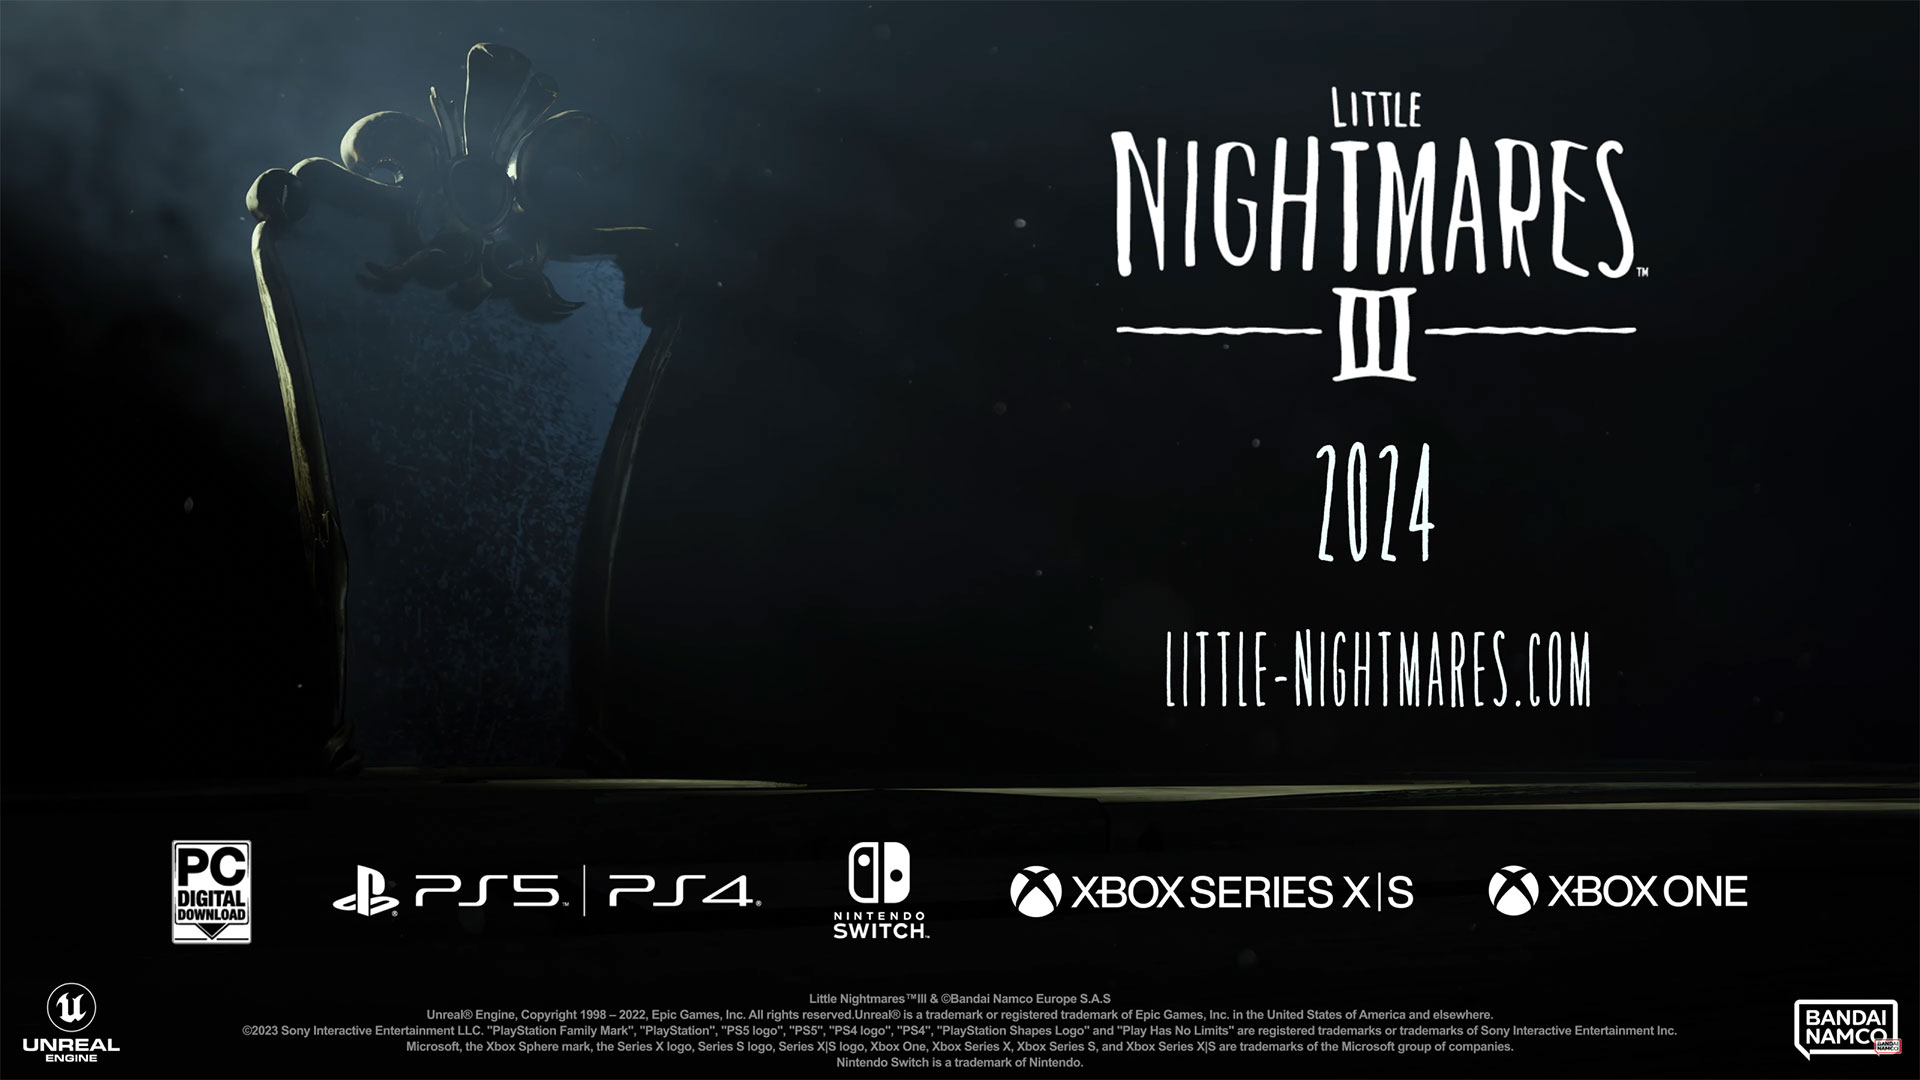 Little Nightmares III was announced during Gamescom Opening Night Live